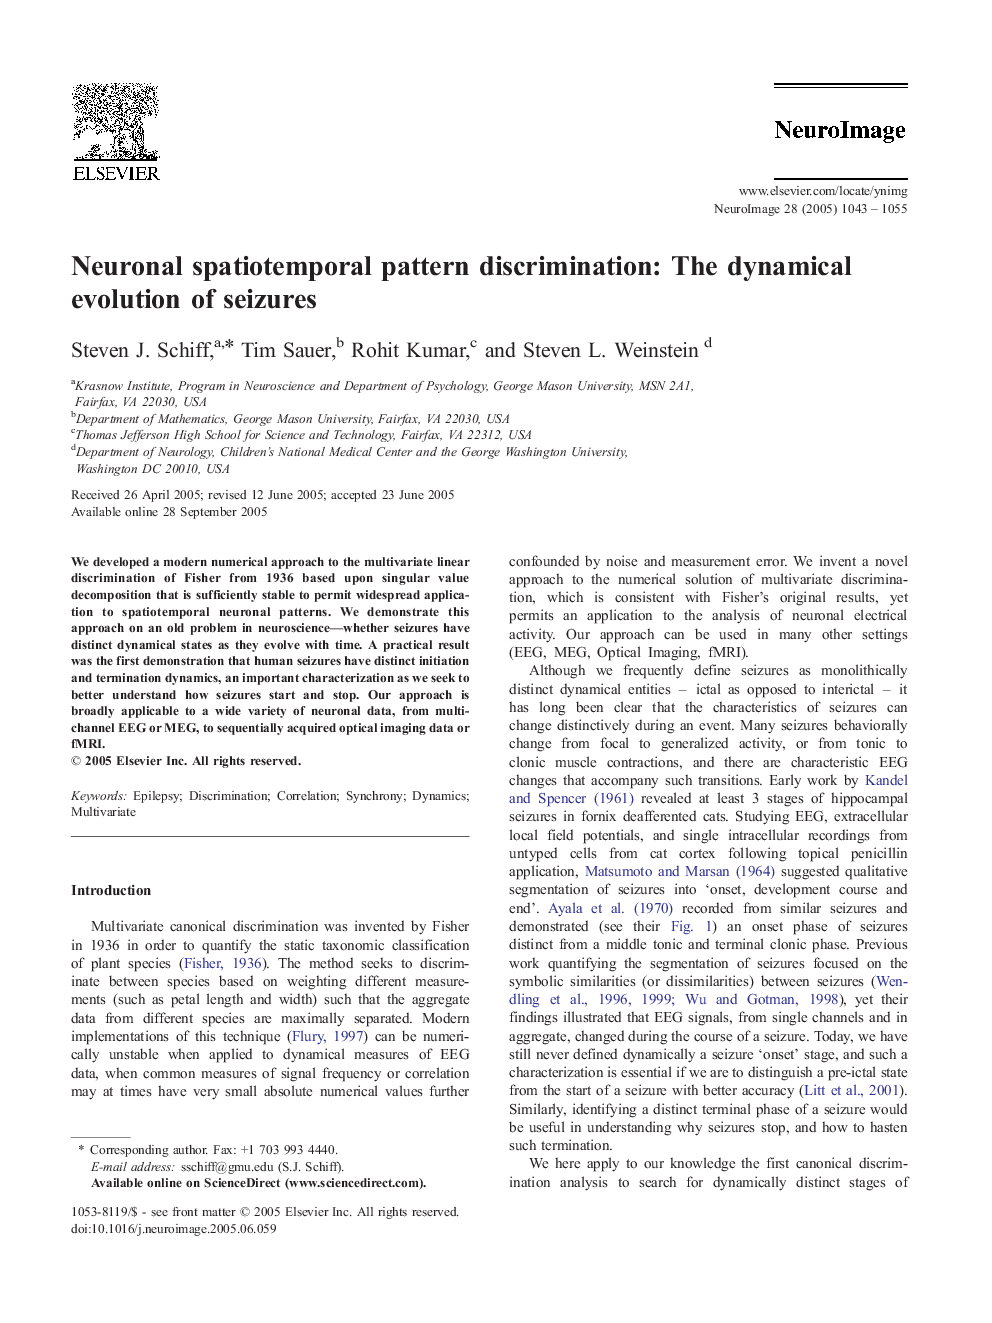 Neuronal spatiotemporal pattern discrimination: The dynamical evolution of seizures